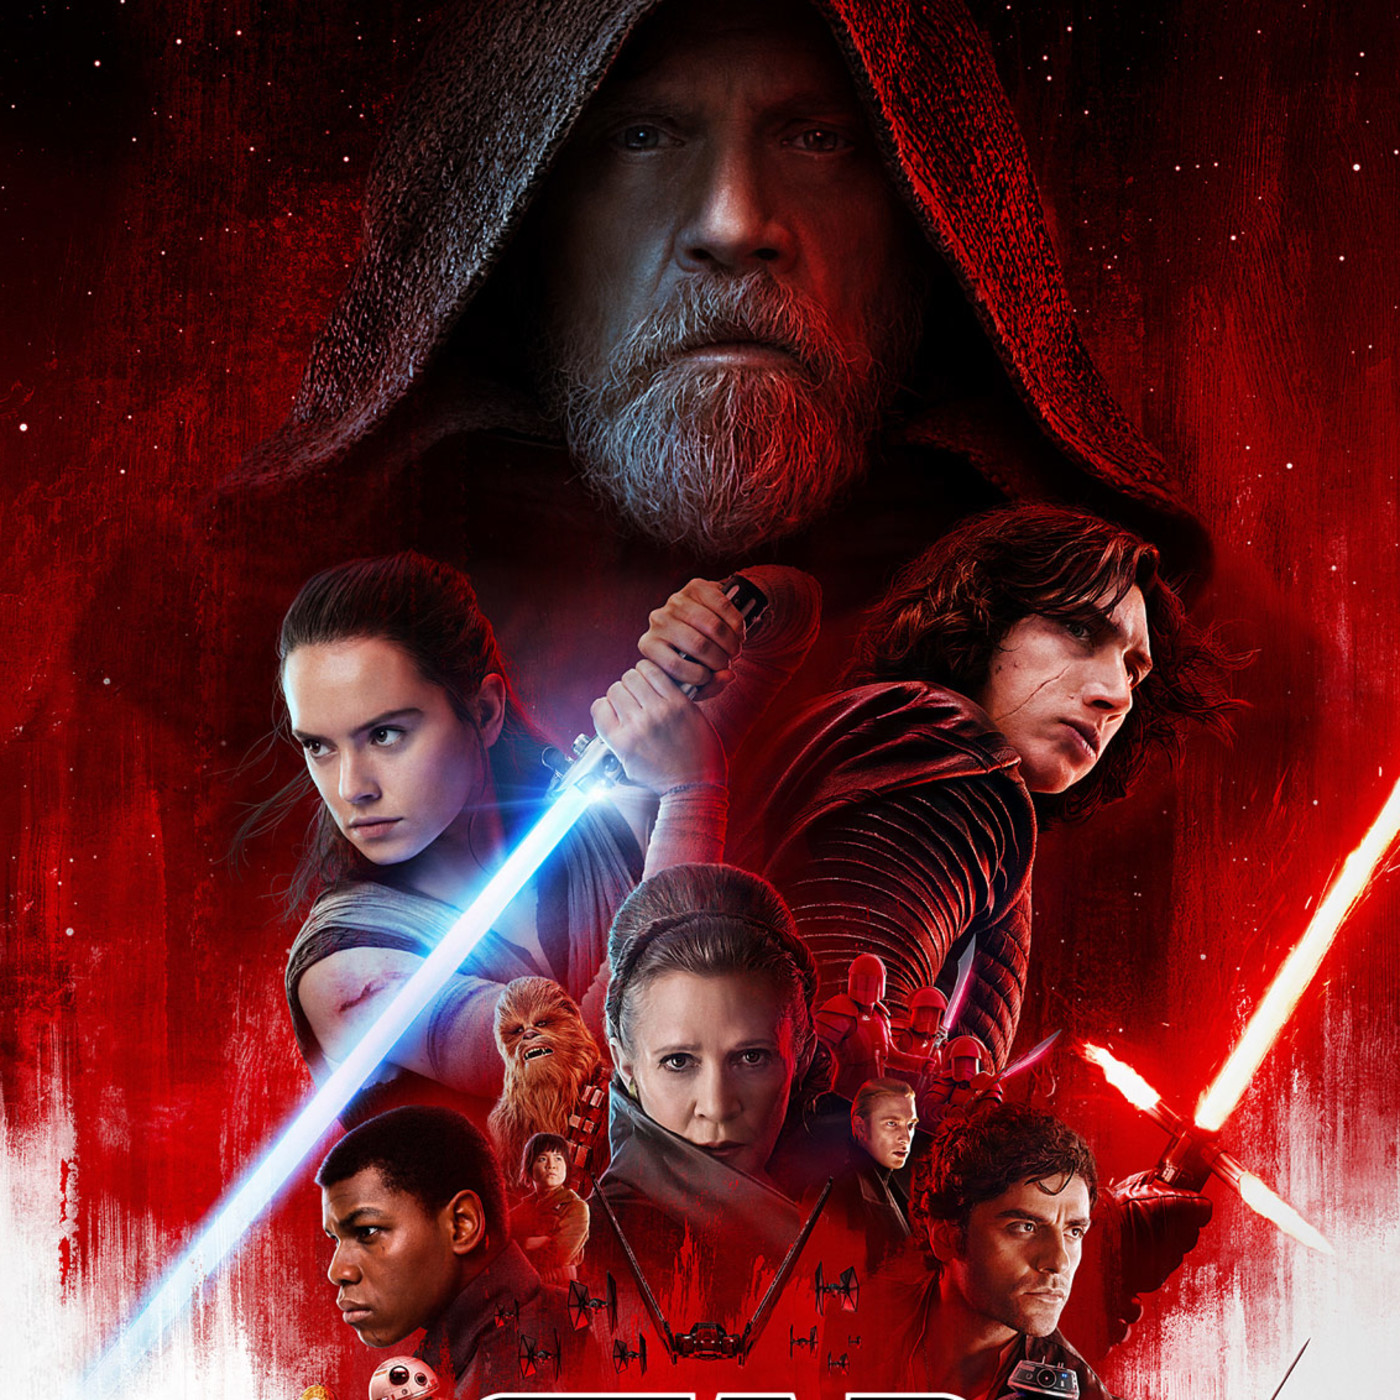 Ep 18 Star Wars: The Last Jedi